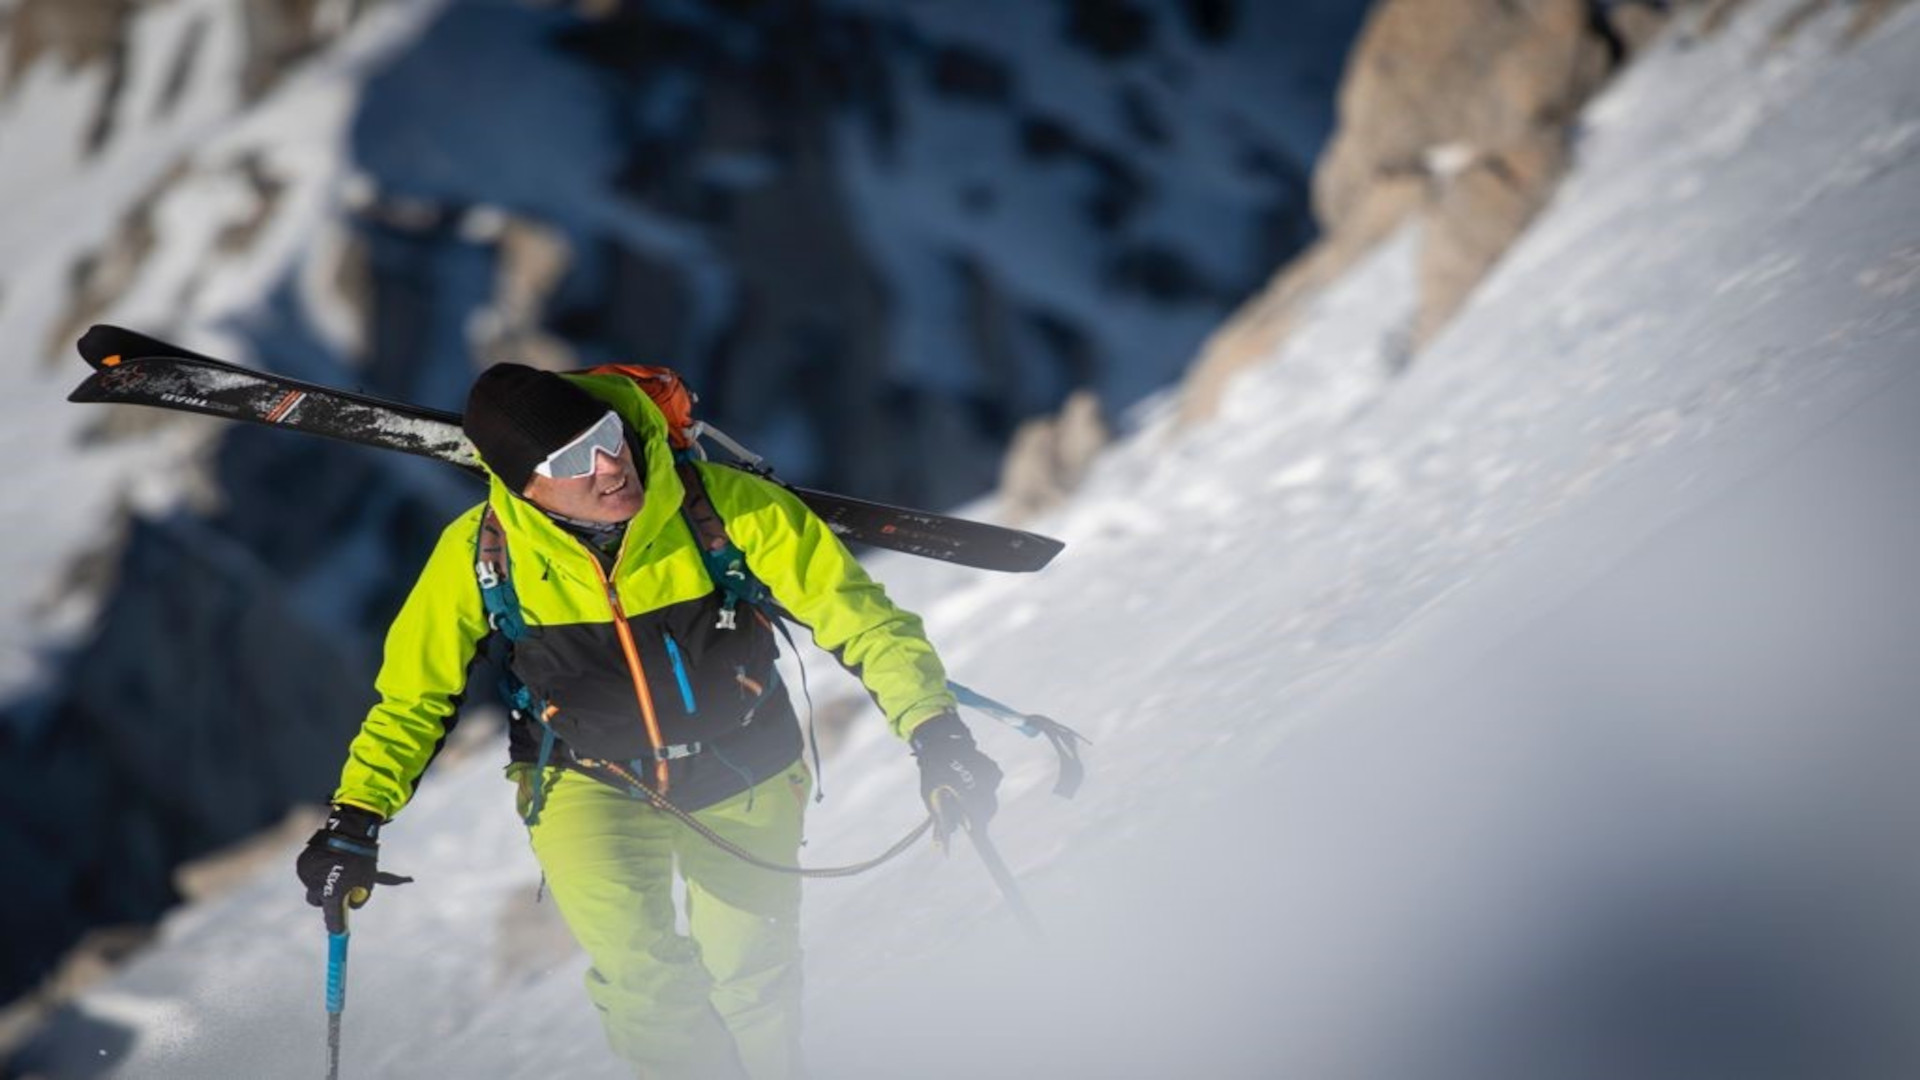 Interview with 8000m peakbagger Marco Confortola | Advnture